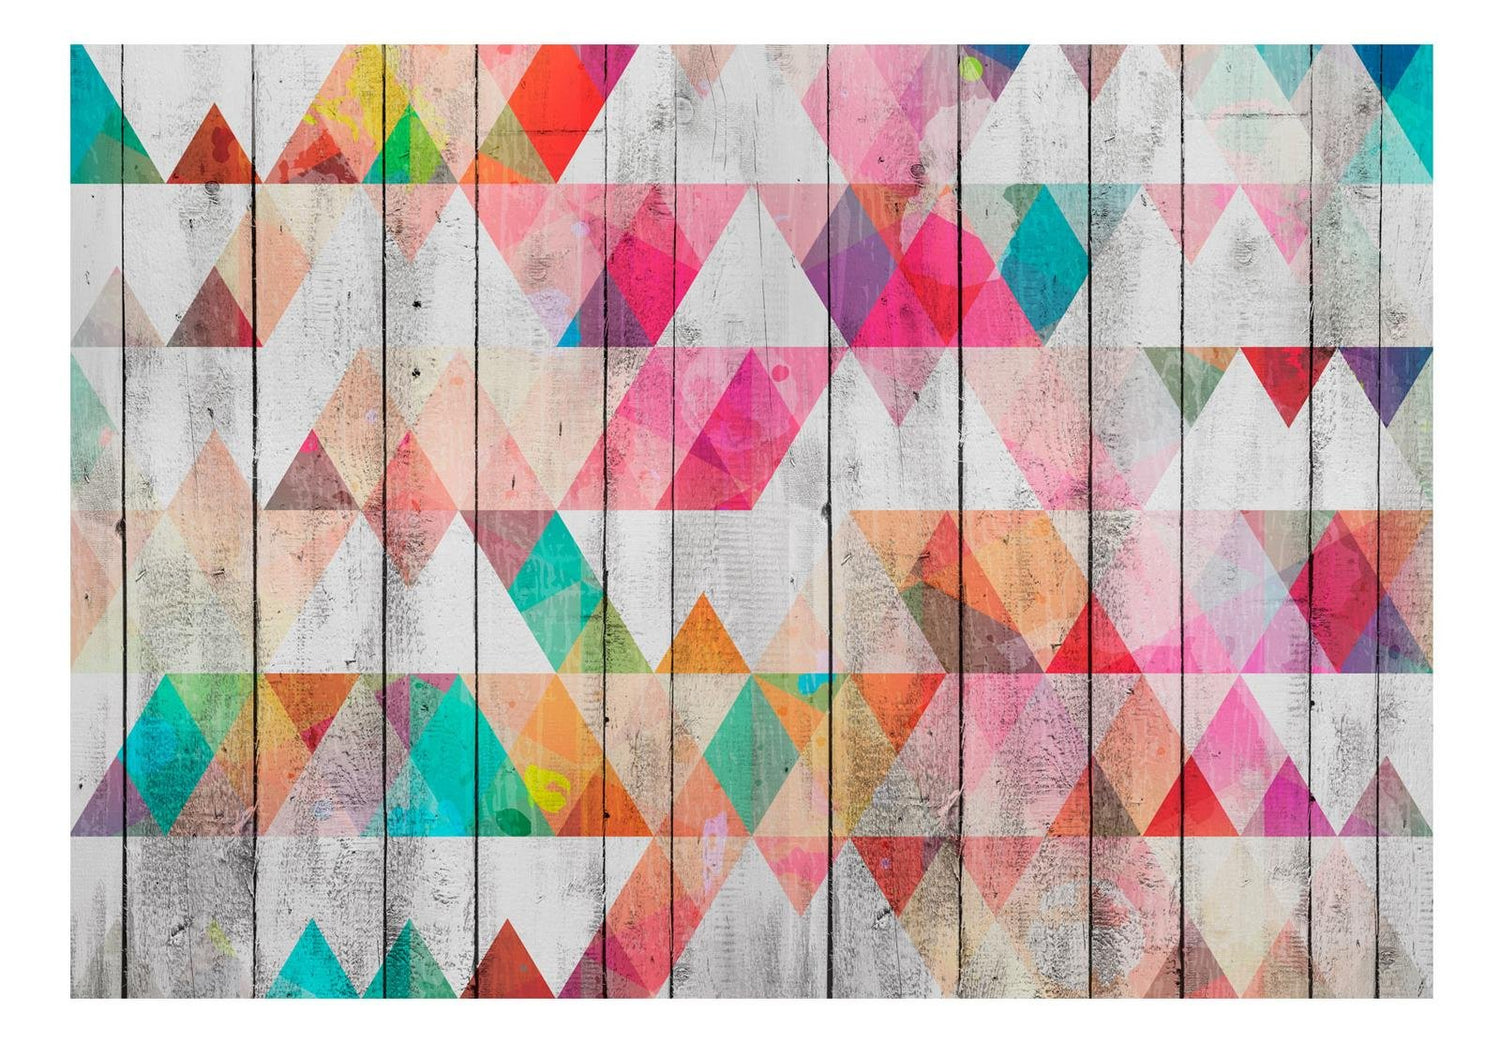 Wall mural - Rainbow Triangles-TipTopHomeDecor